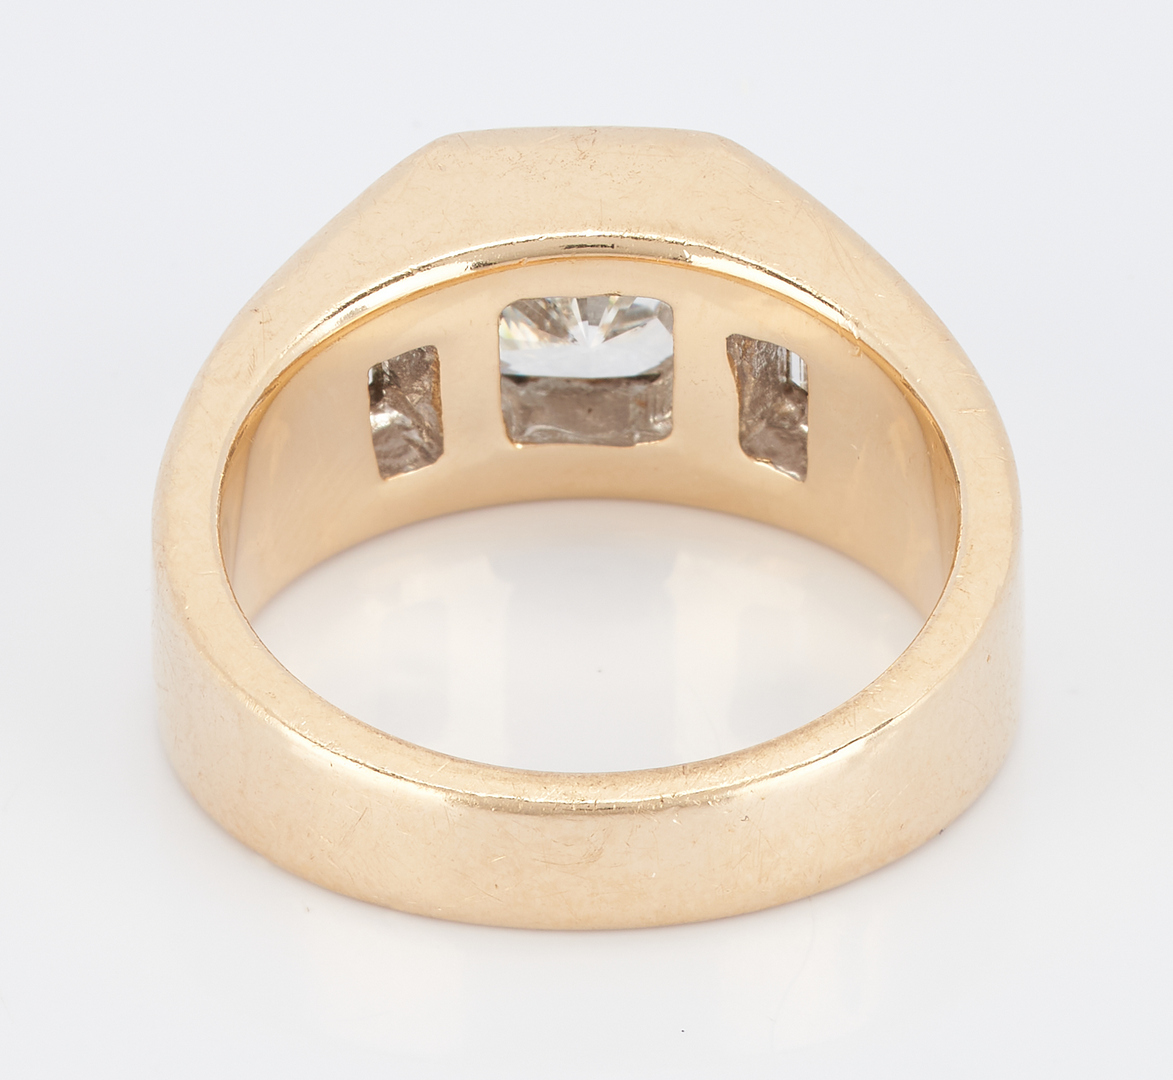 Lot 253: Men's 14K Gold & Diamond Ring, 1.5 Carats